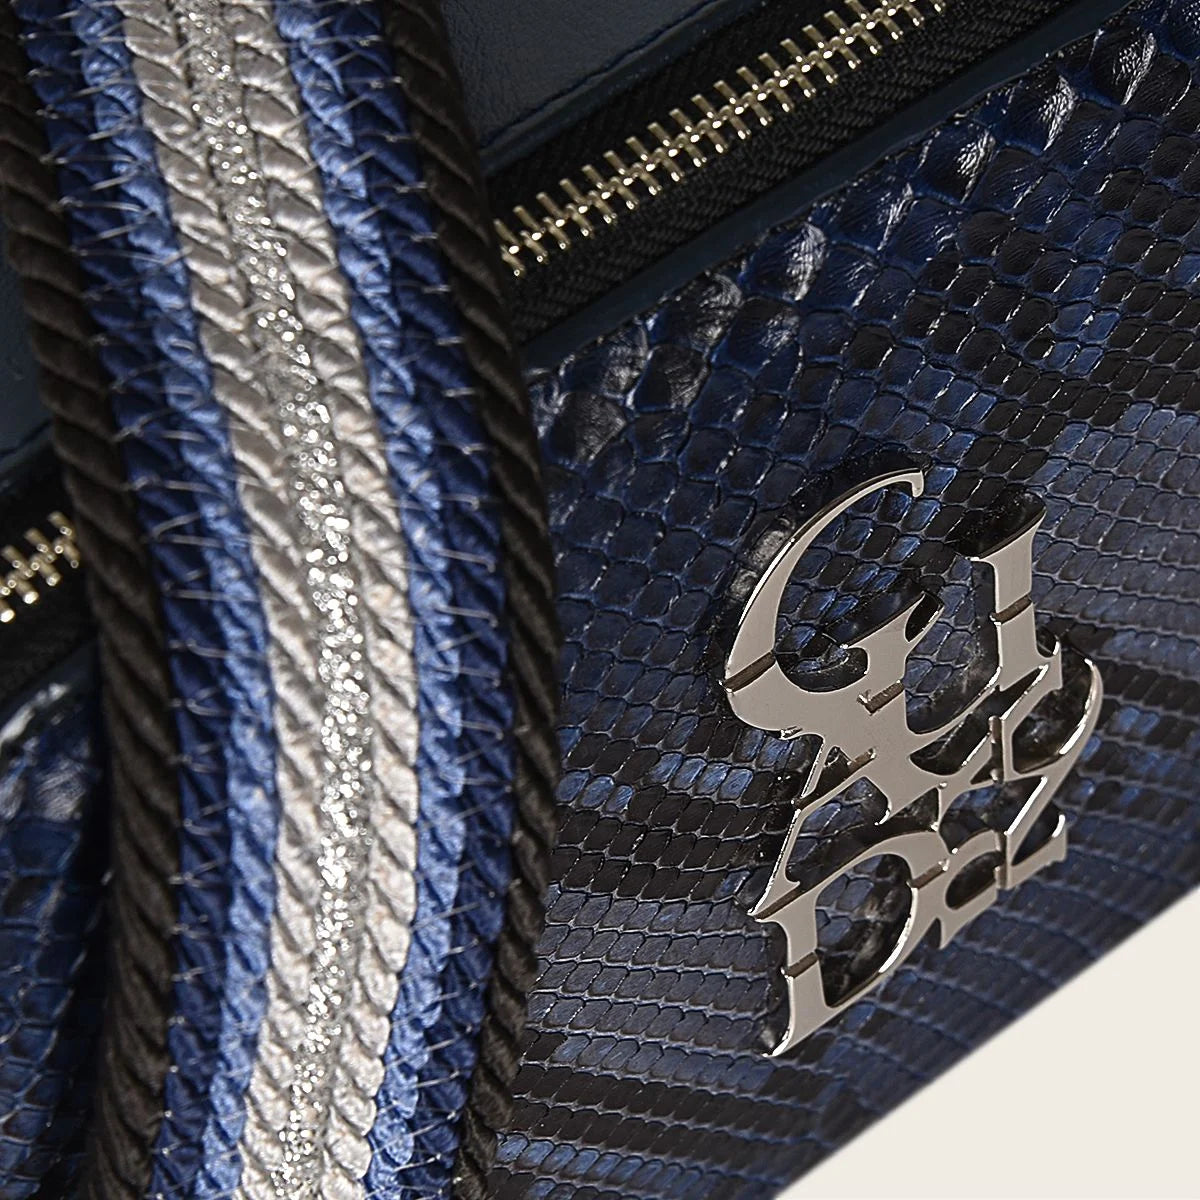 Blue exotic leather crossbody bag